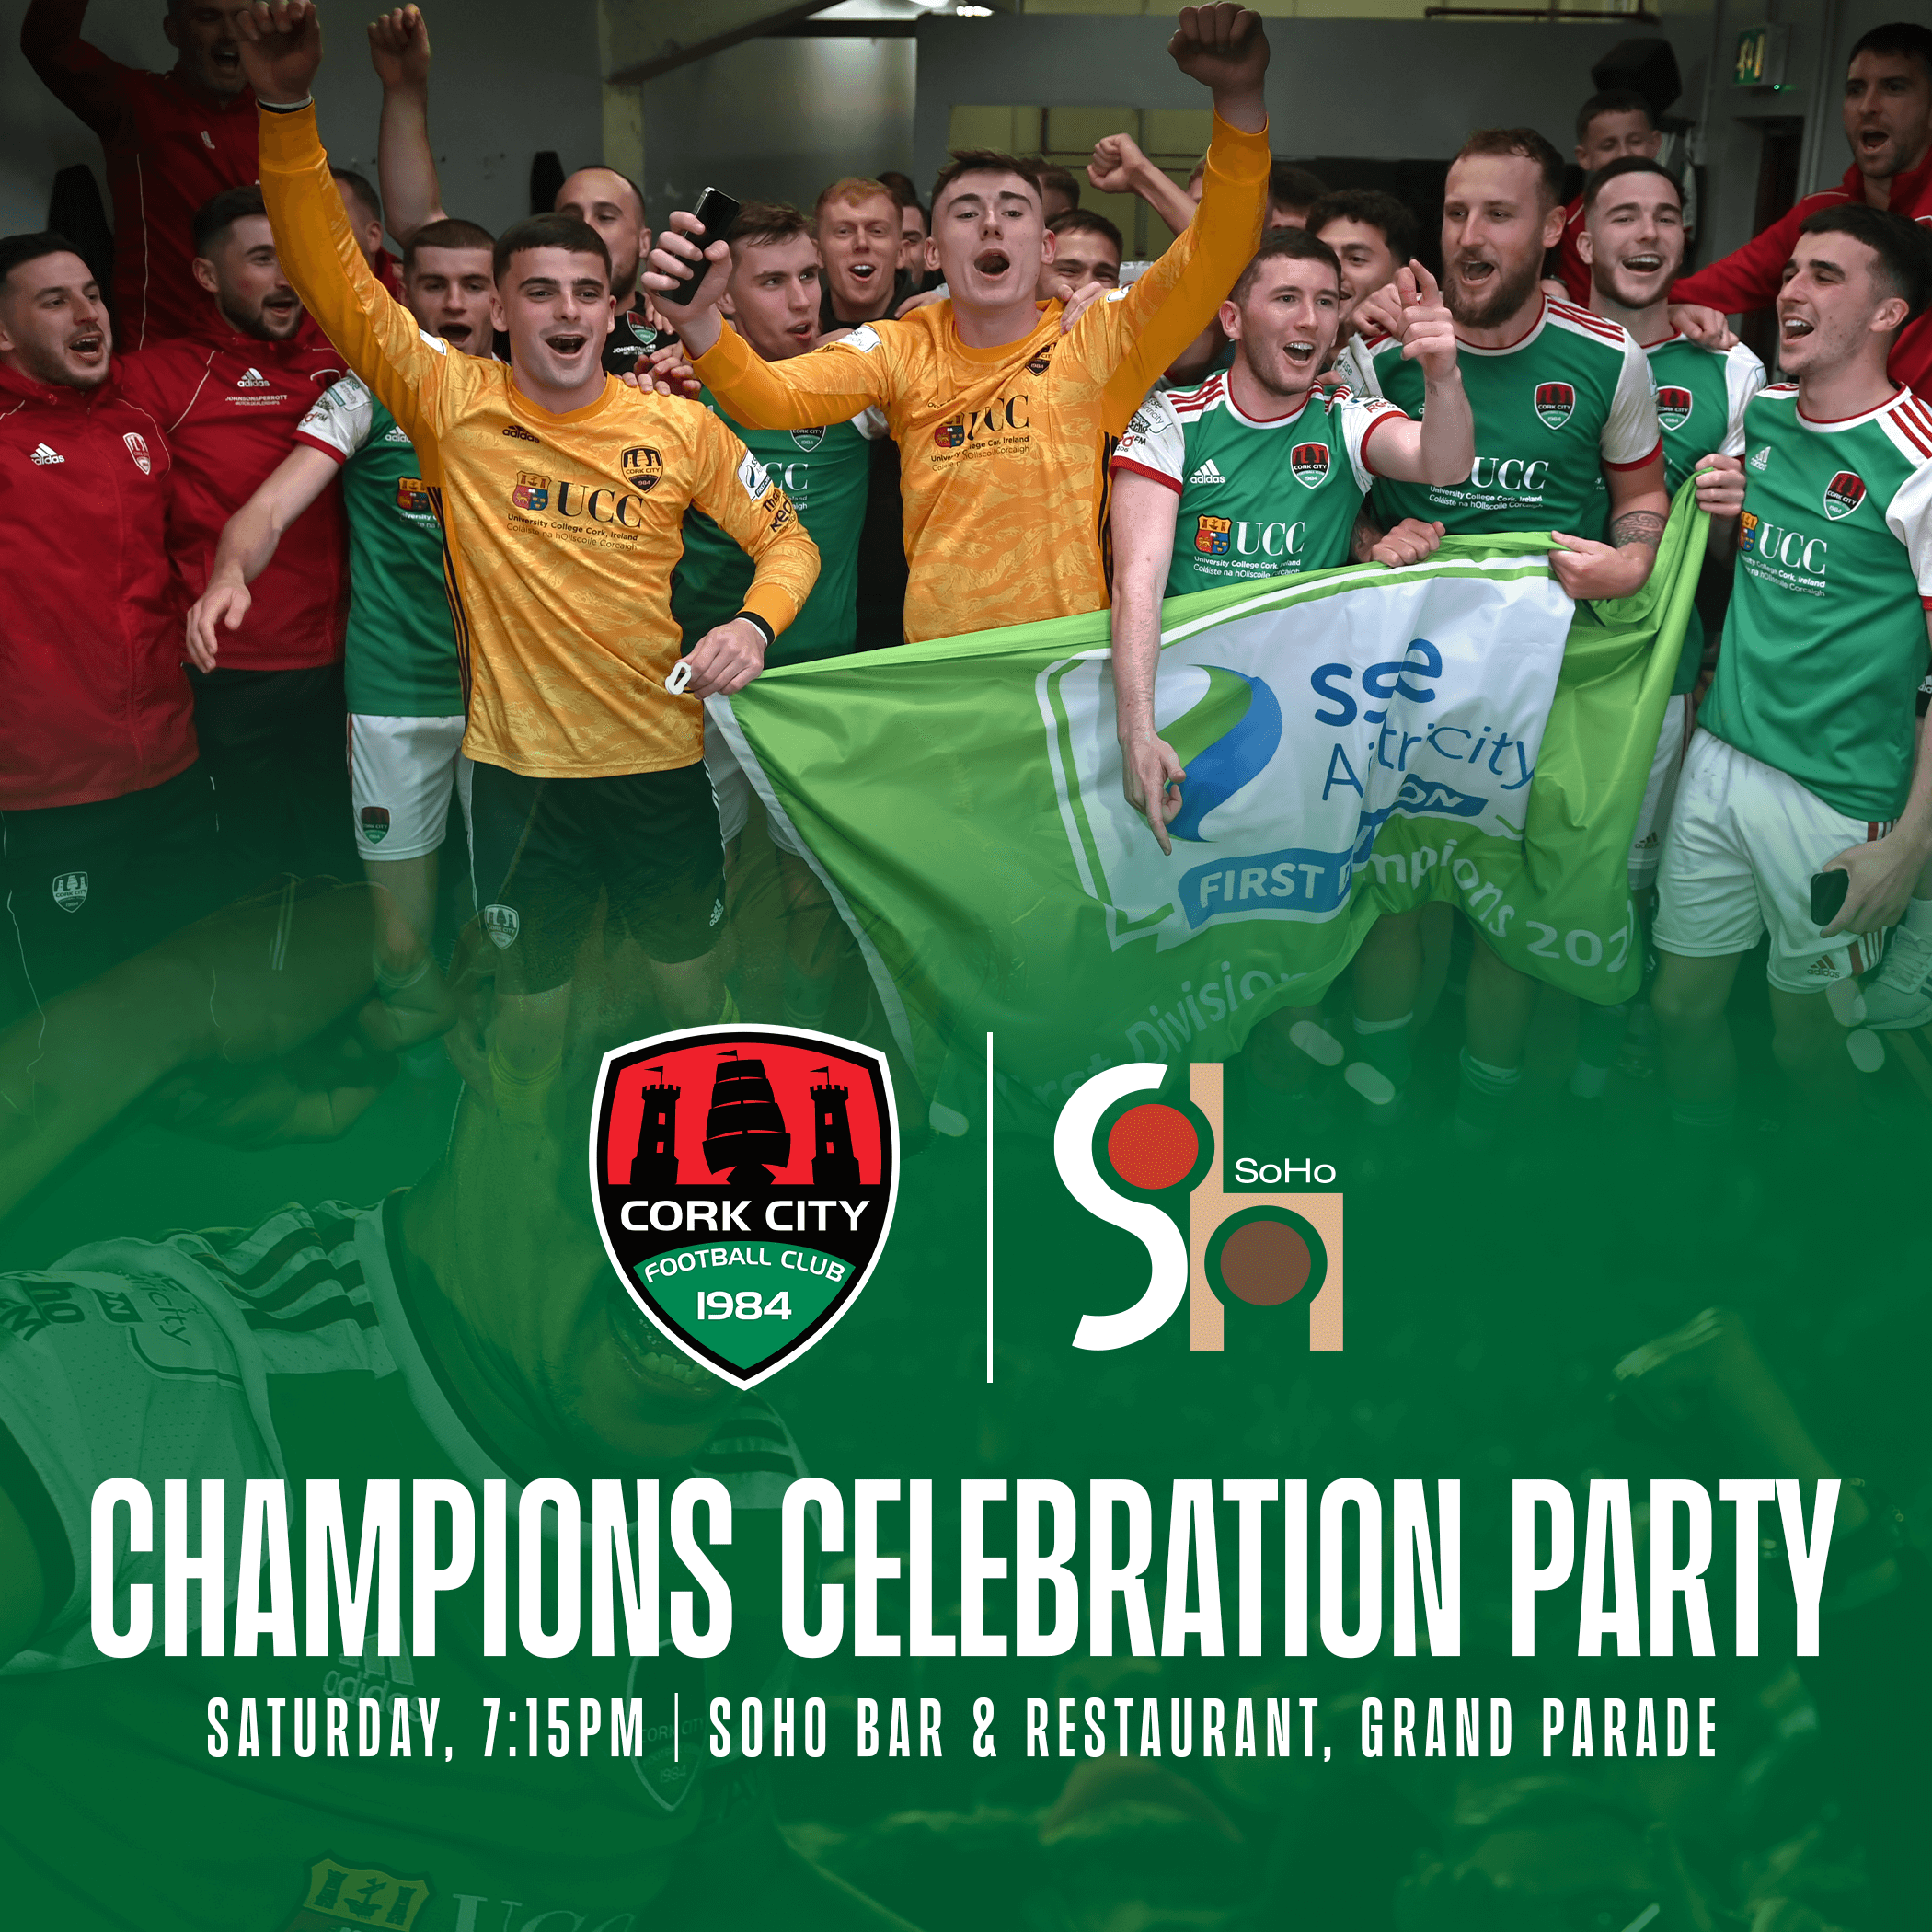 Celebrations in SoHo on Saturday!